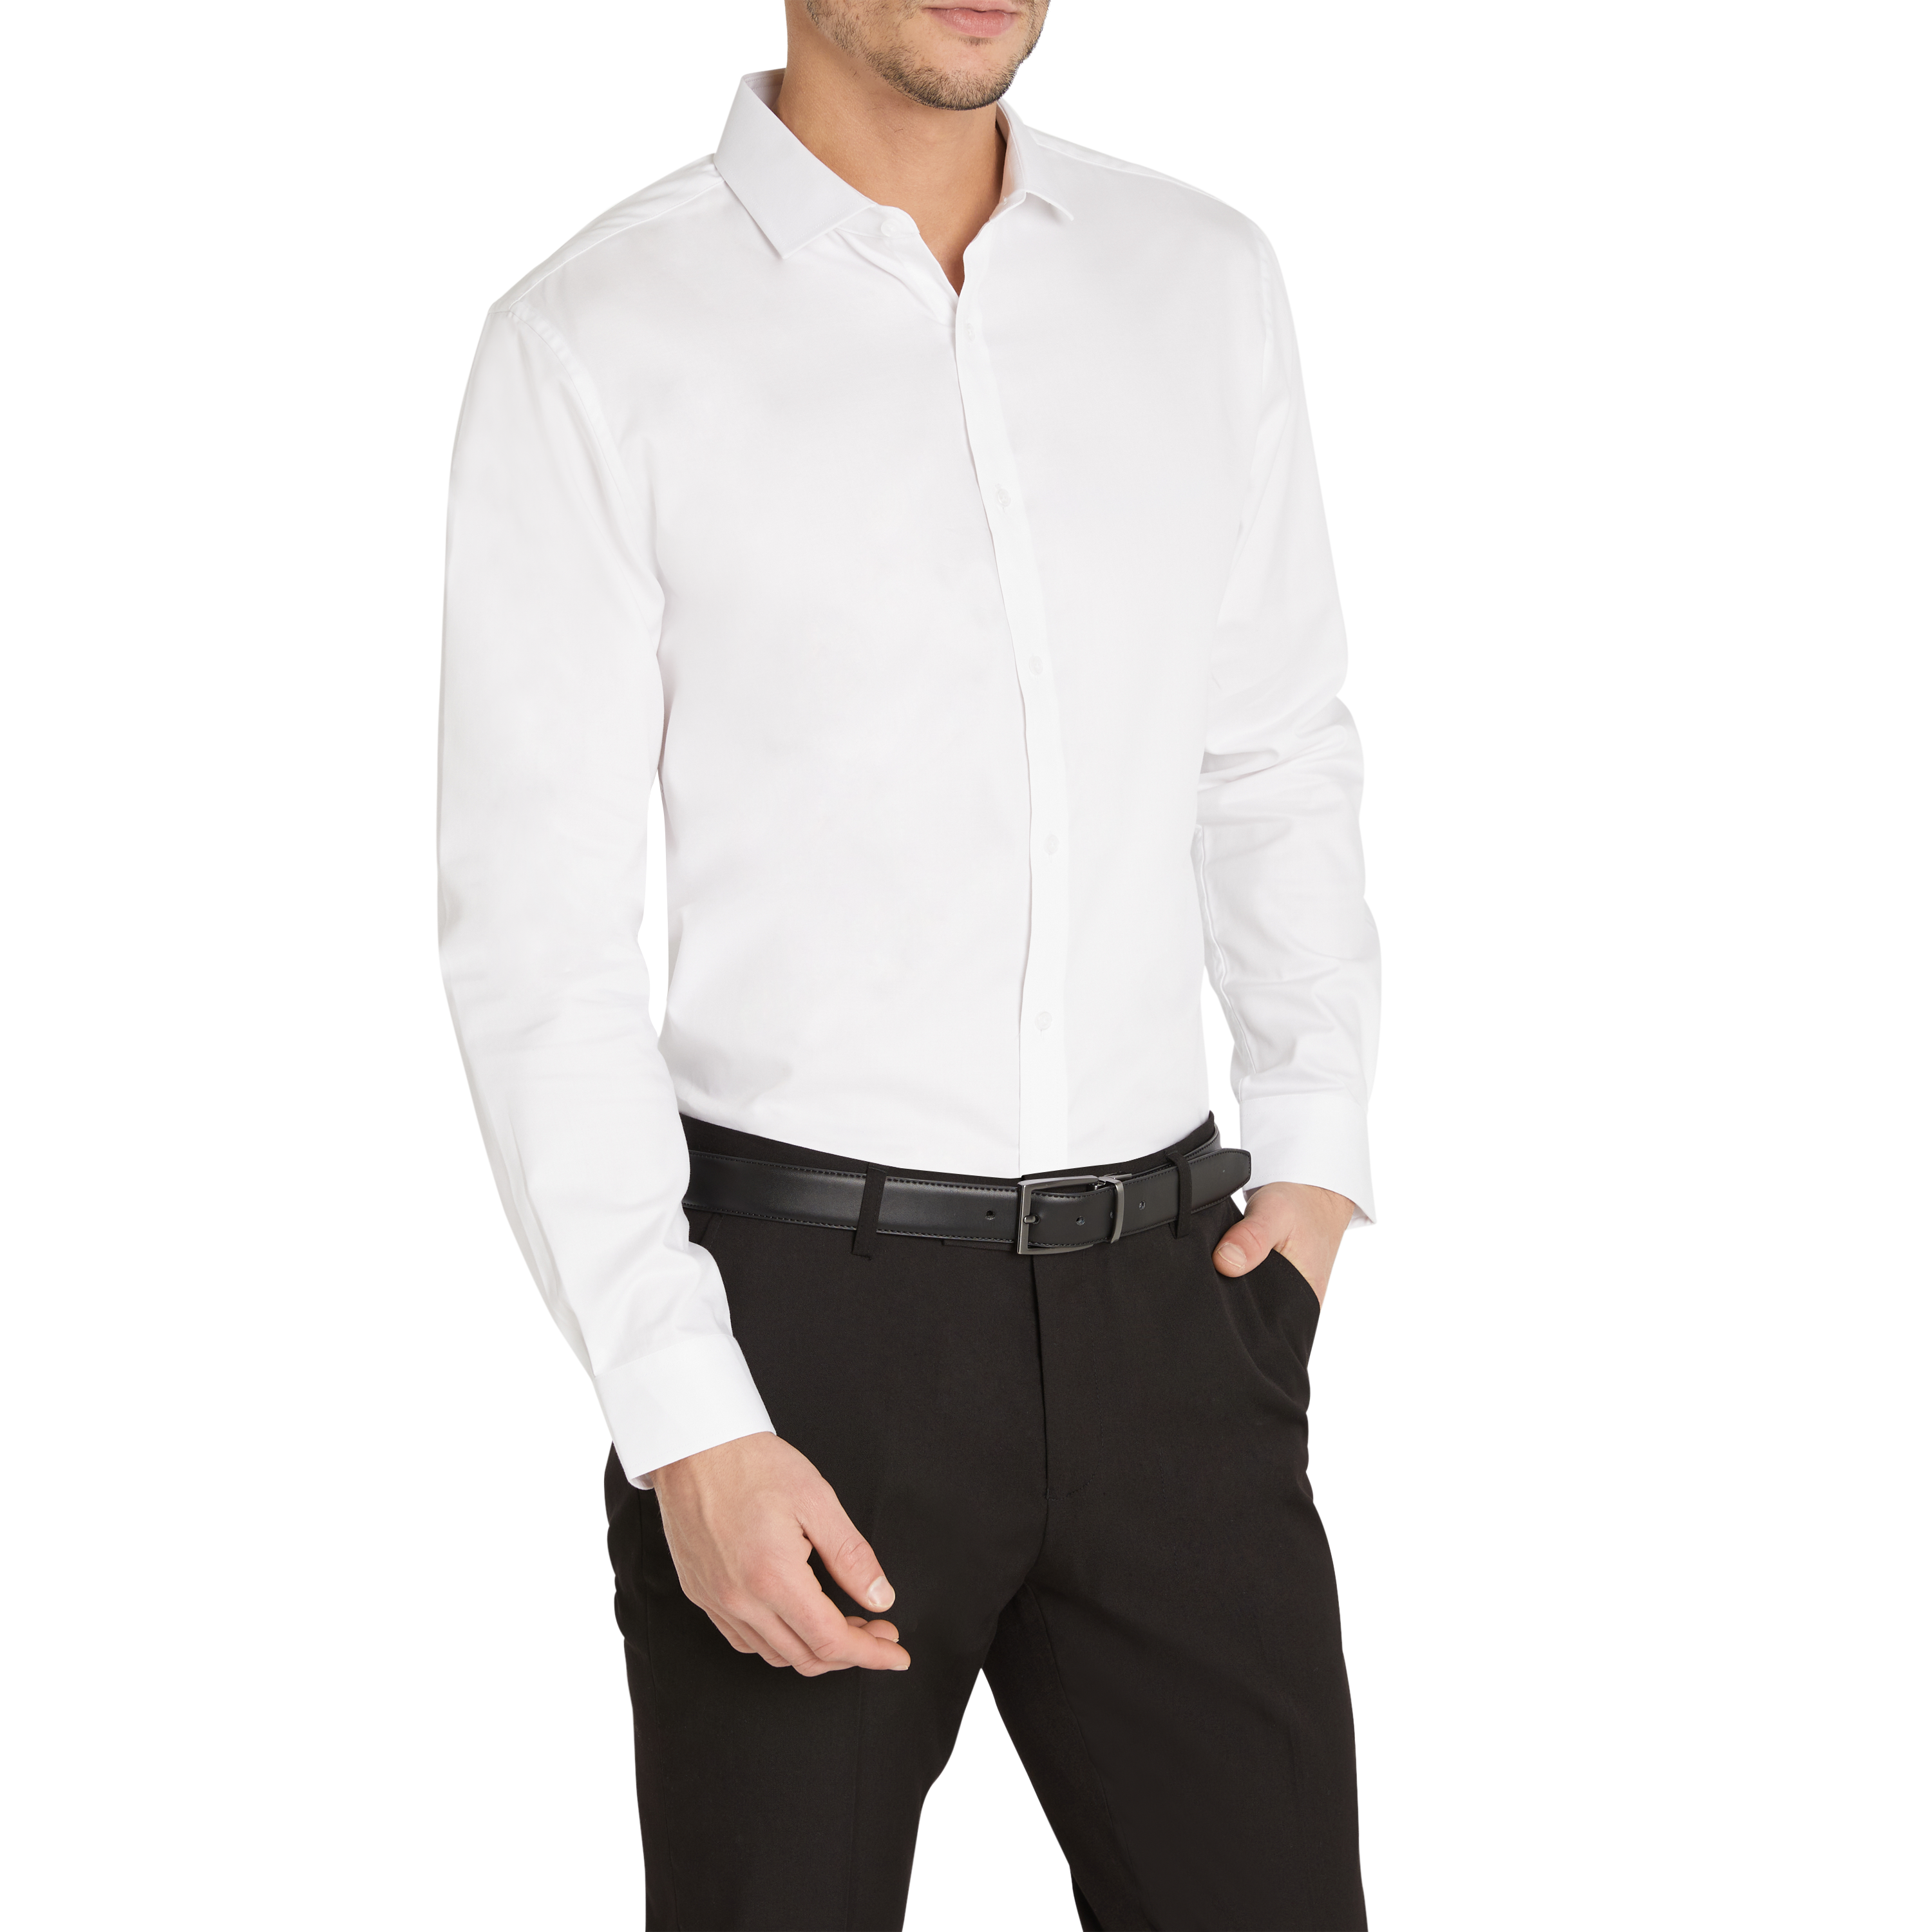 Men White shirt | White shirt men, Grey pants men, Formal men outfit